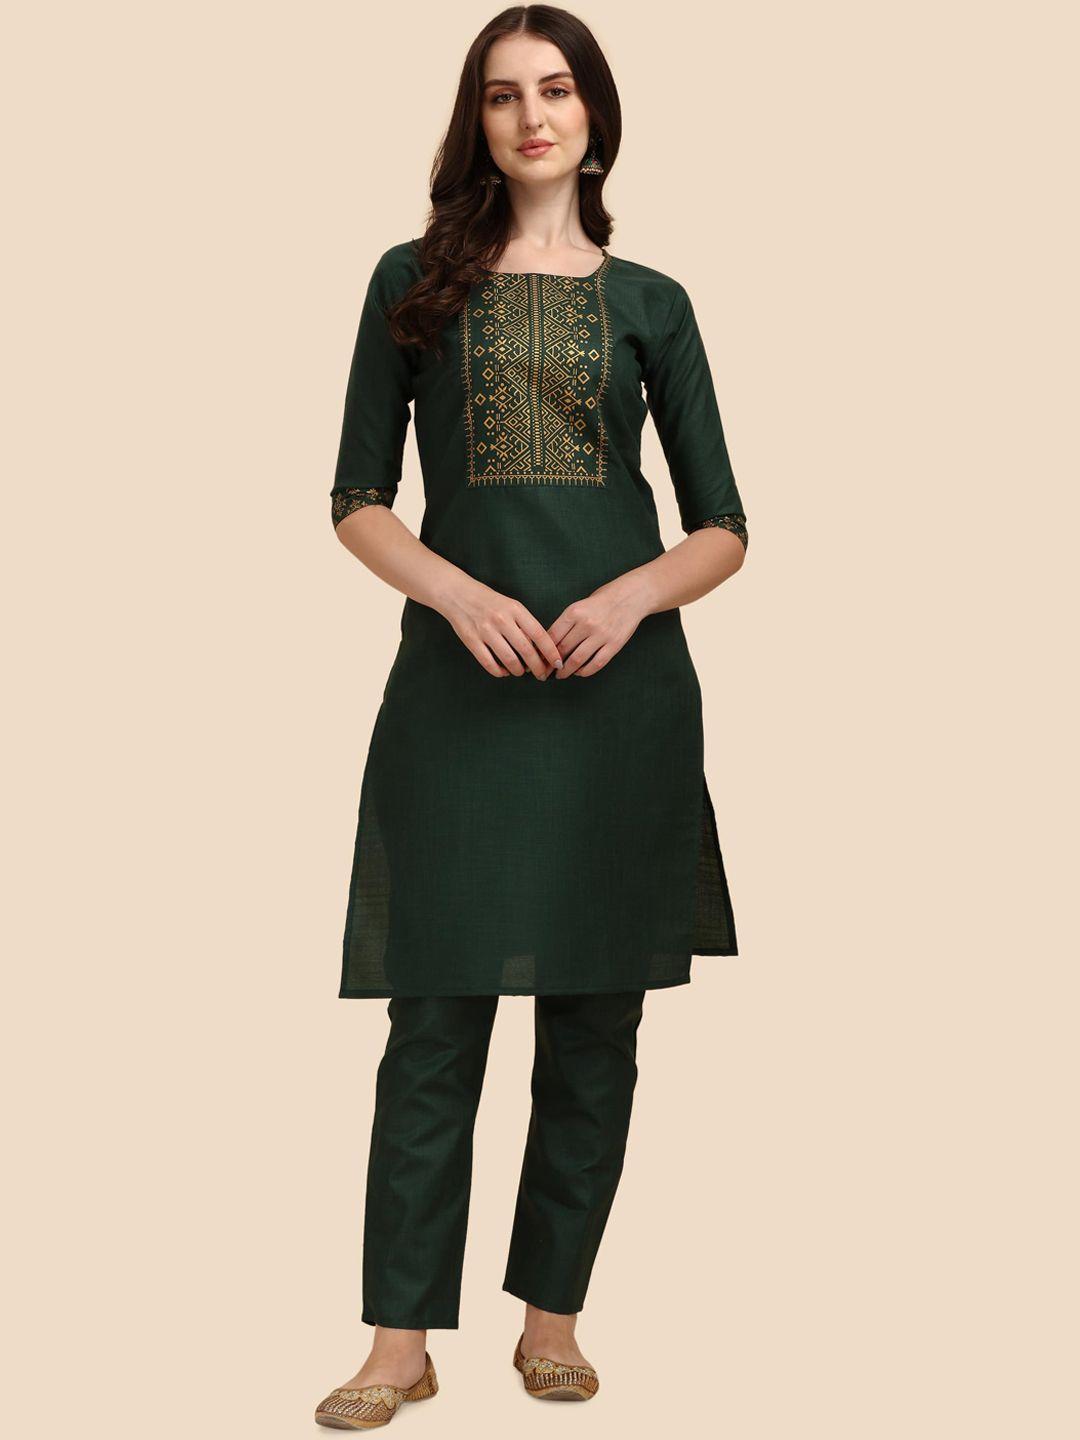 paralians women green & gold-toned cotton yoke design handloom kurta